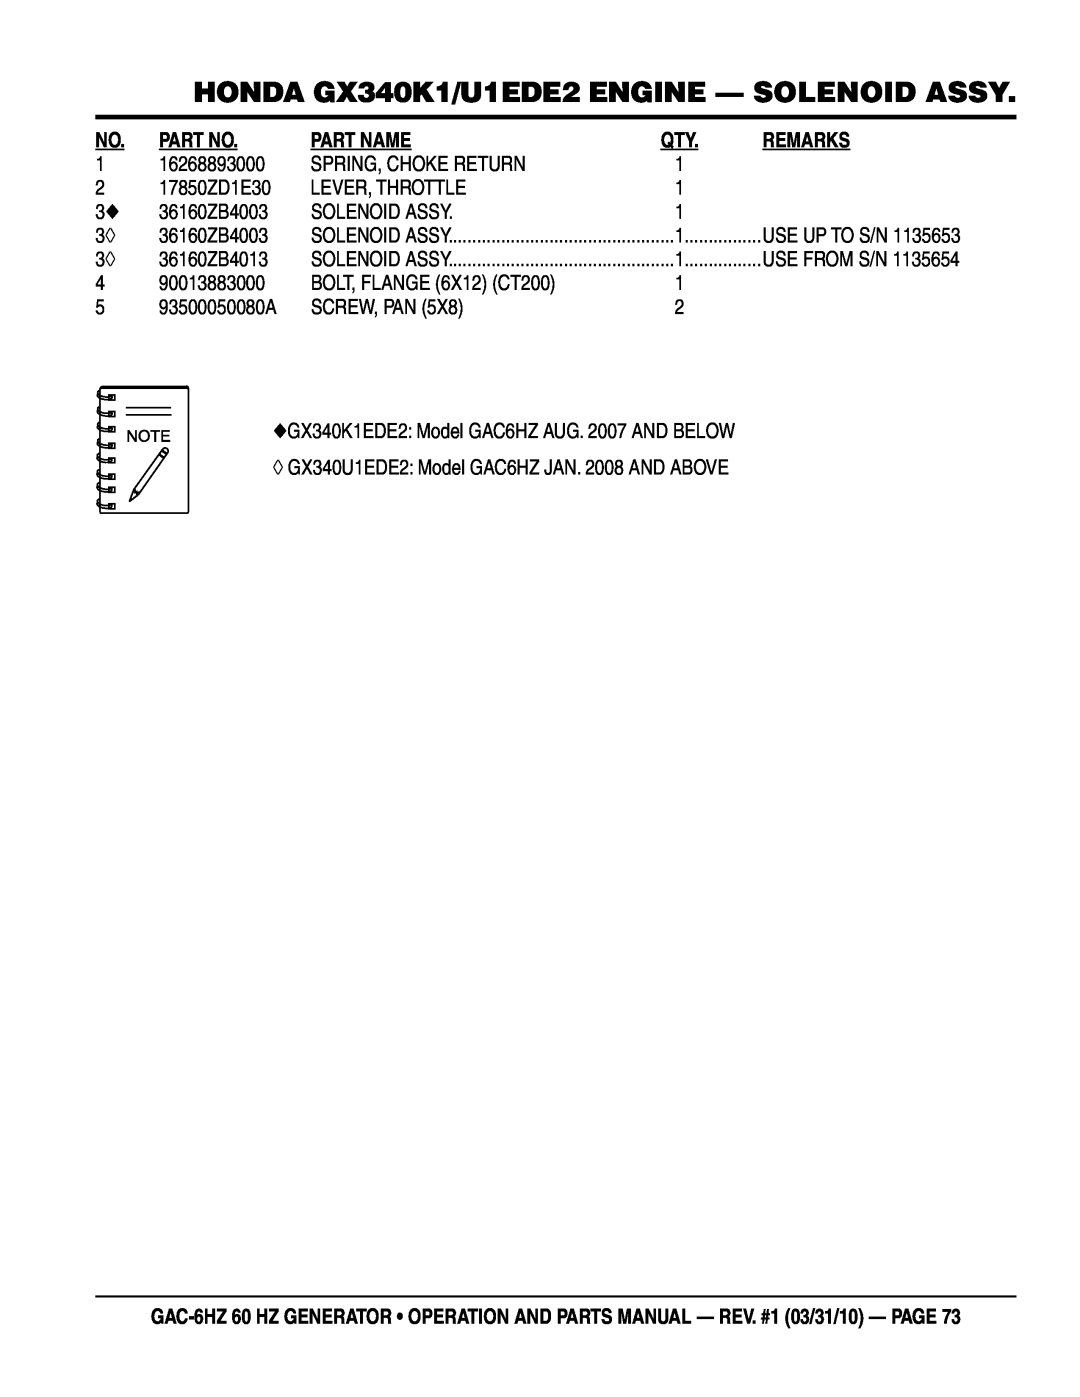 Multiquip GAC6HZ manual HONDA GX340K1/U1EDE2 ENGINE - SOLENOID ASSY, Part Name, Remarks 